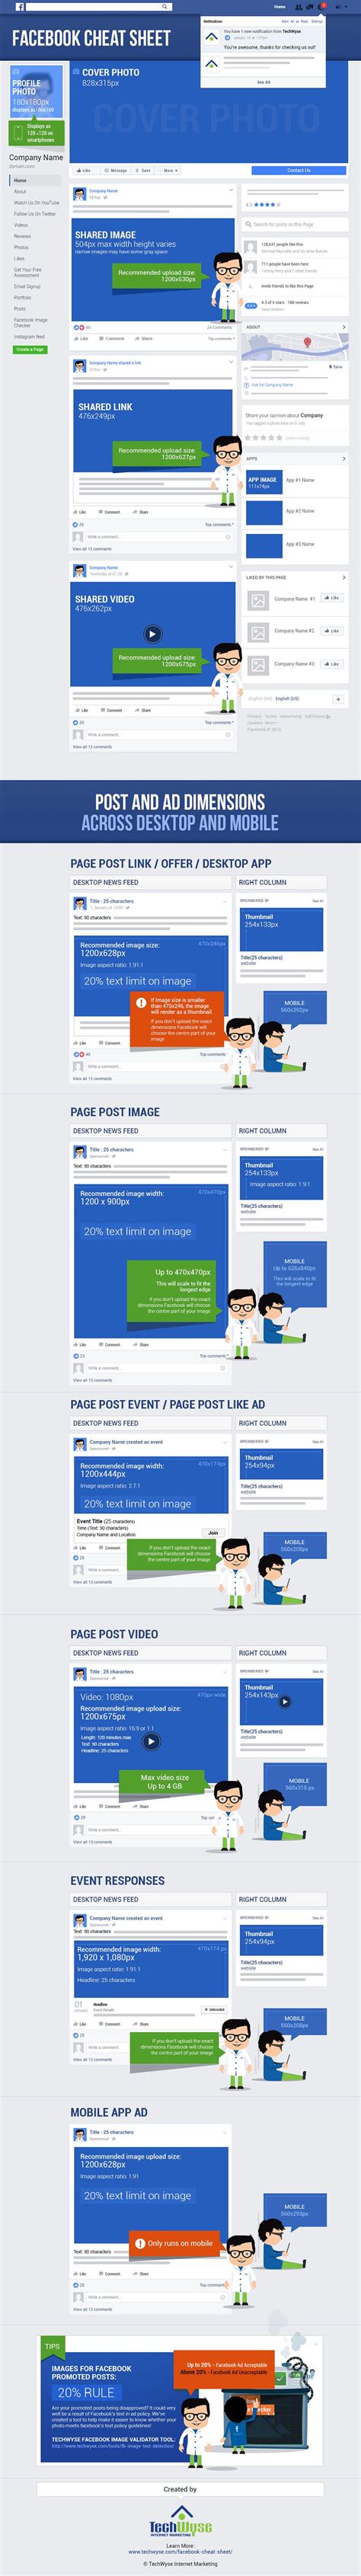 Facebook Cheat Sheet Infographic ~ Visualistan